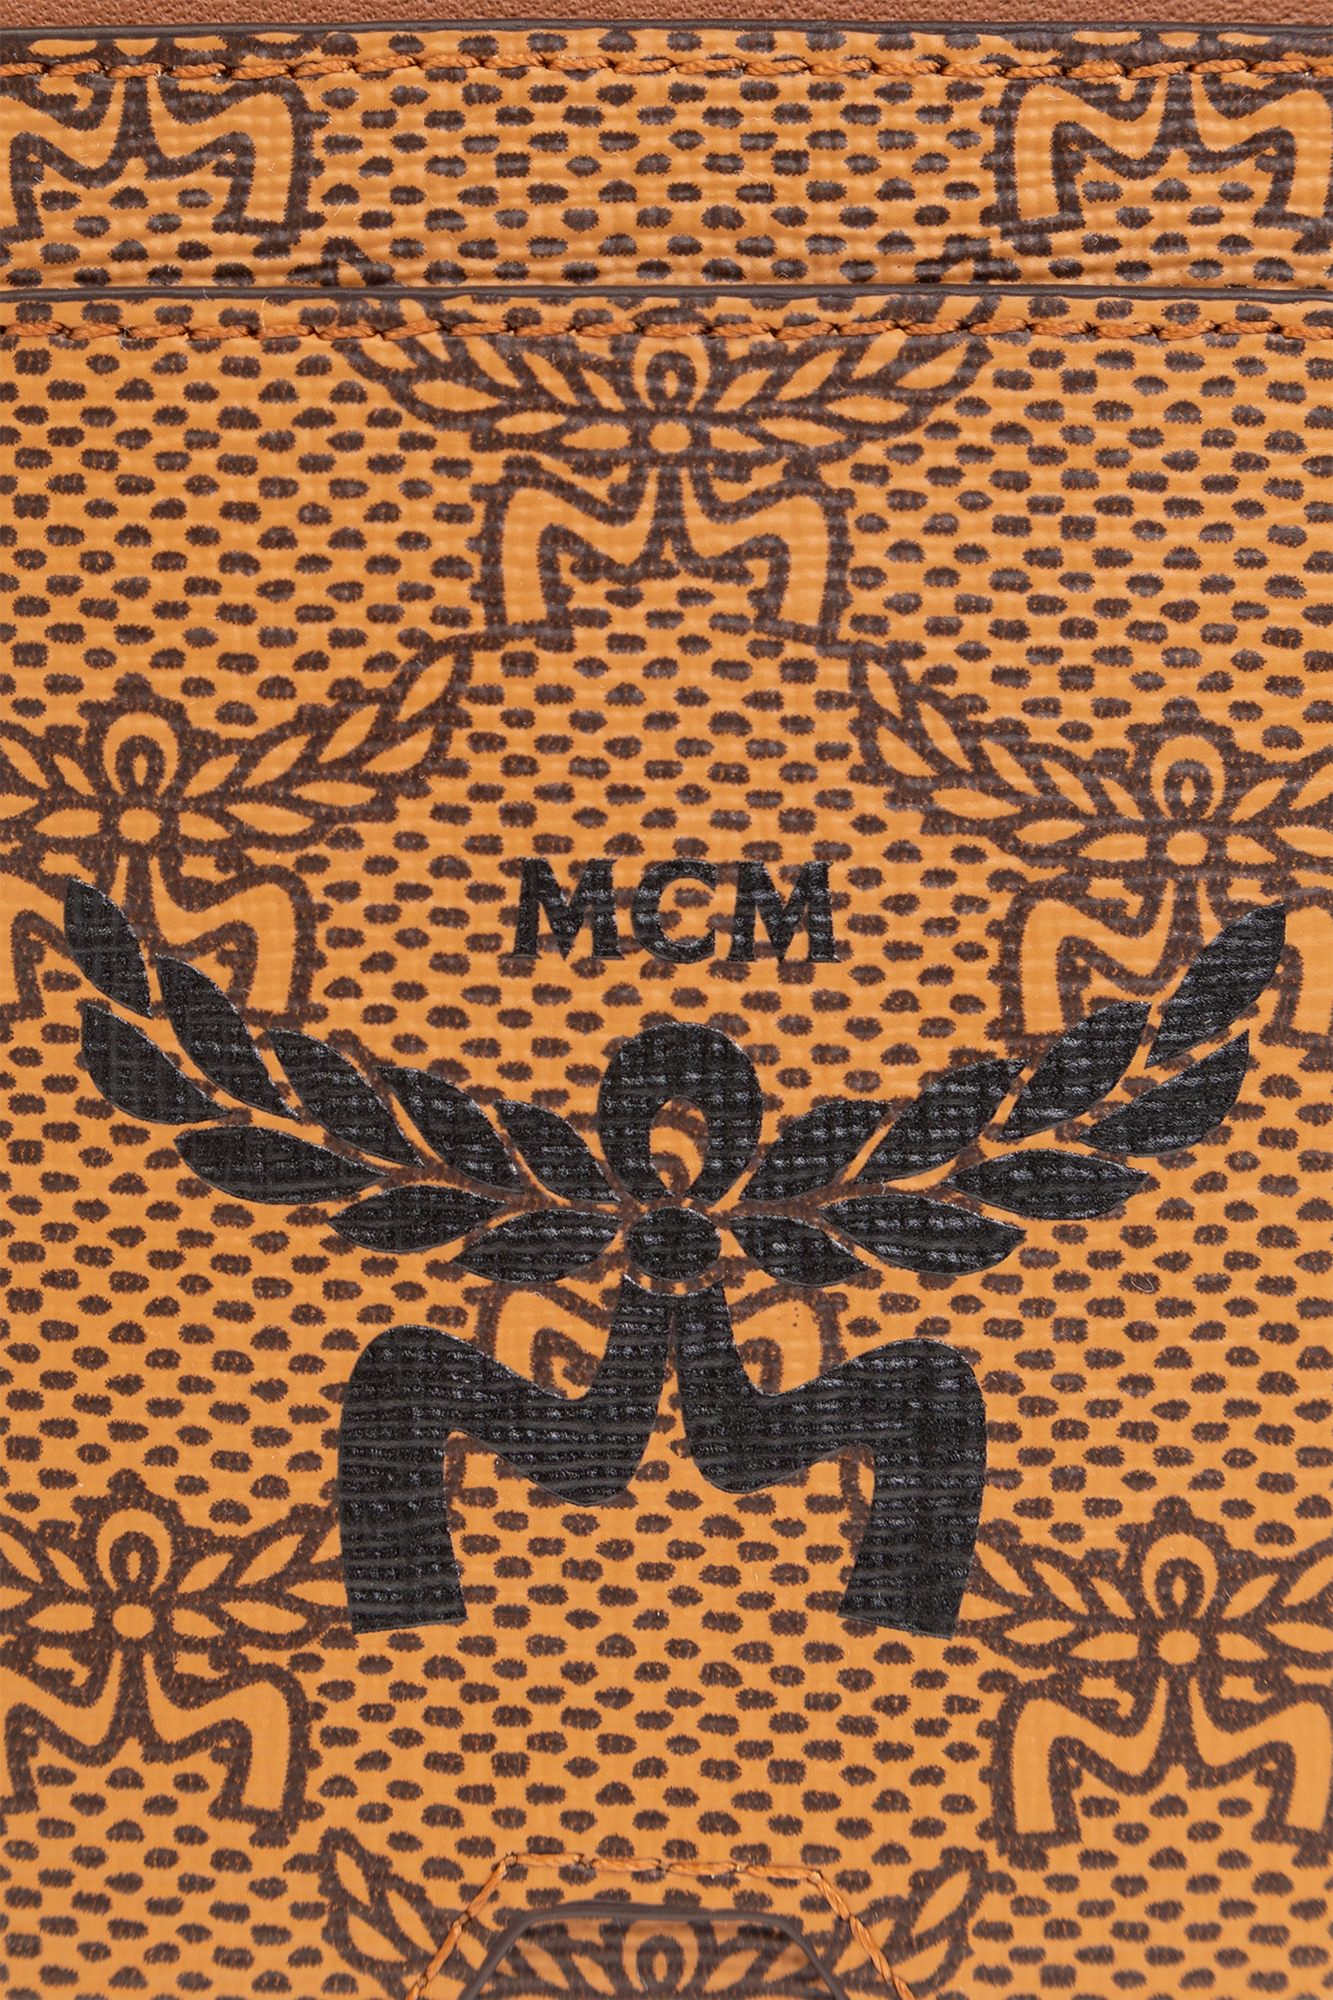 MCM Card case